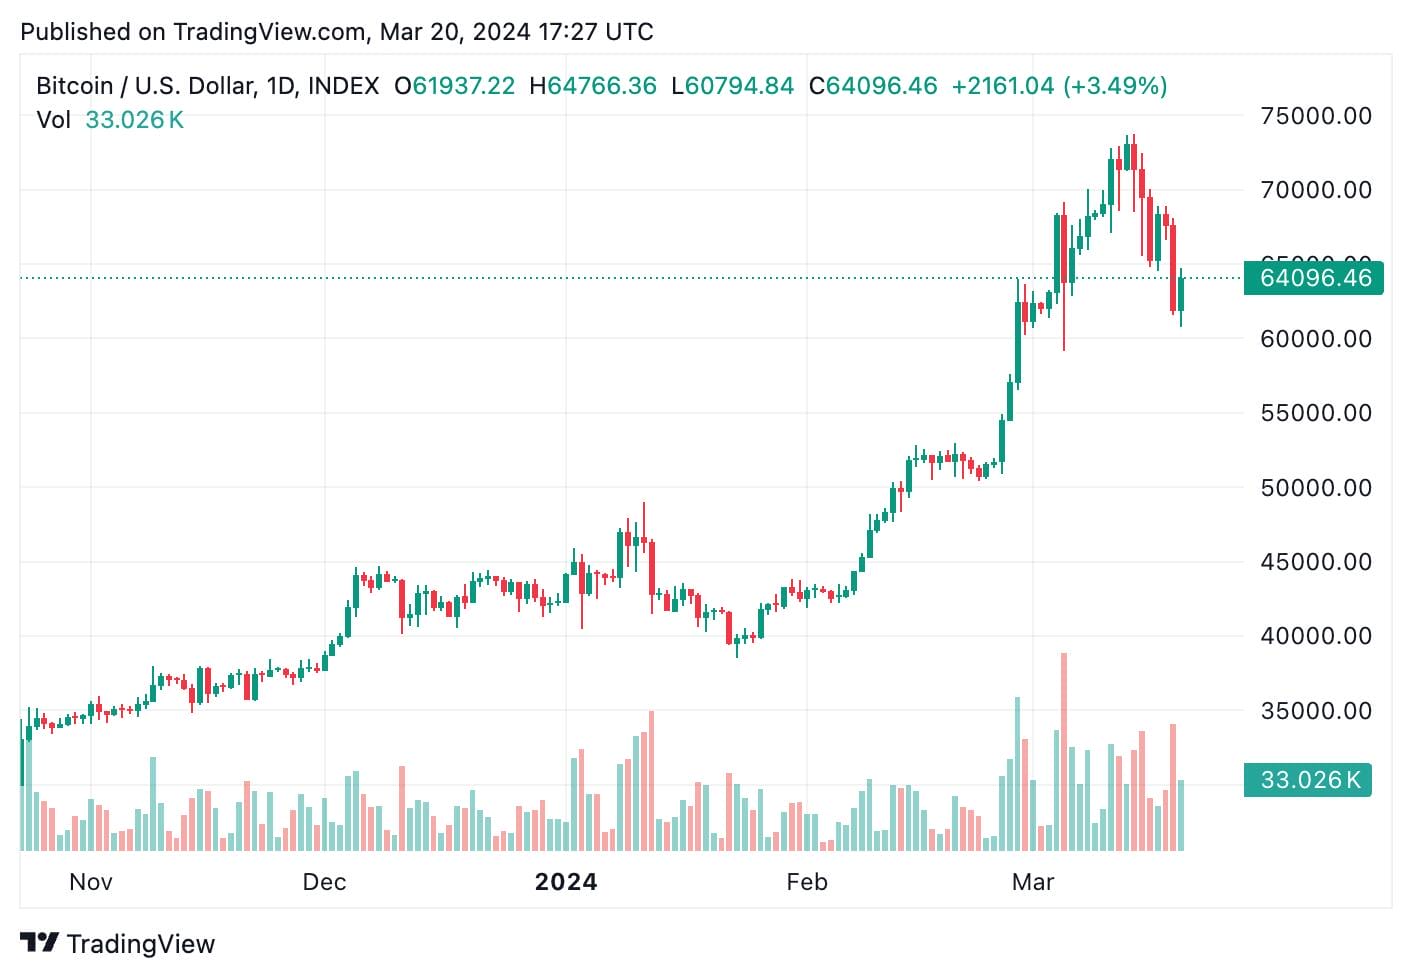 BTC/USD Daily Candlestick Chart